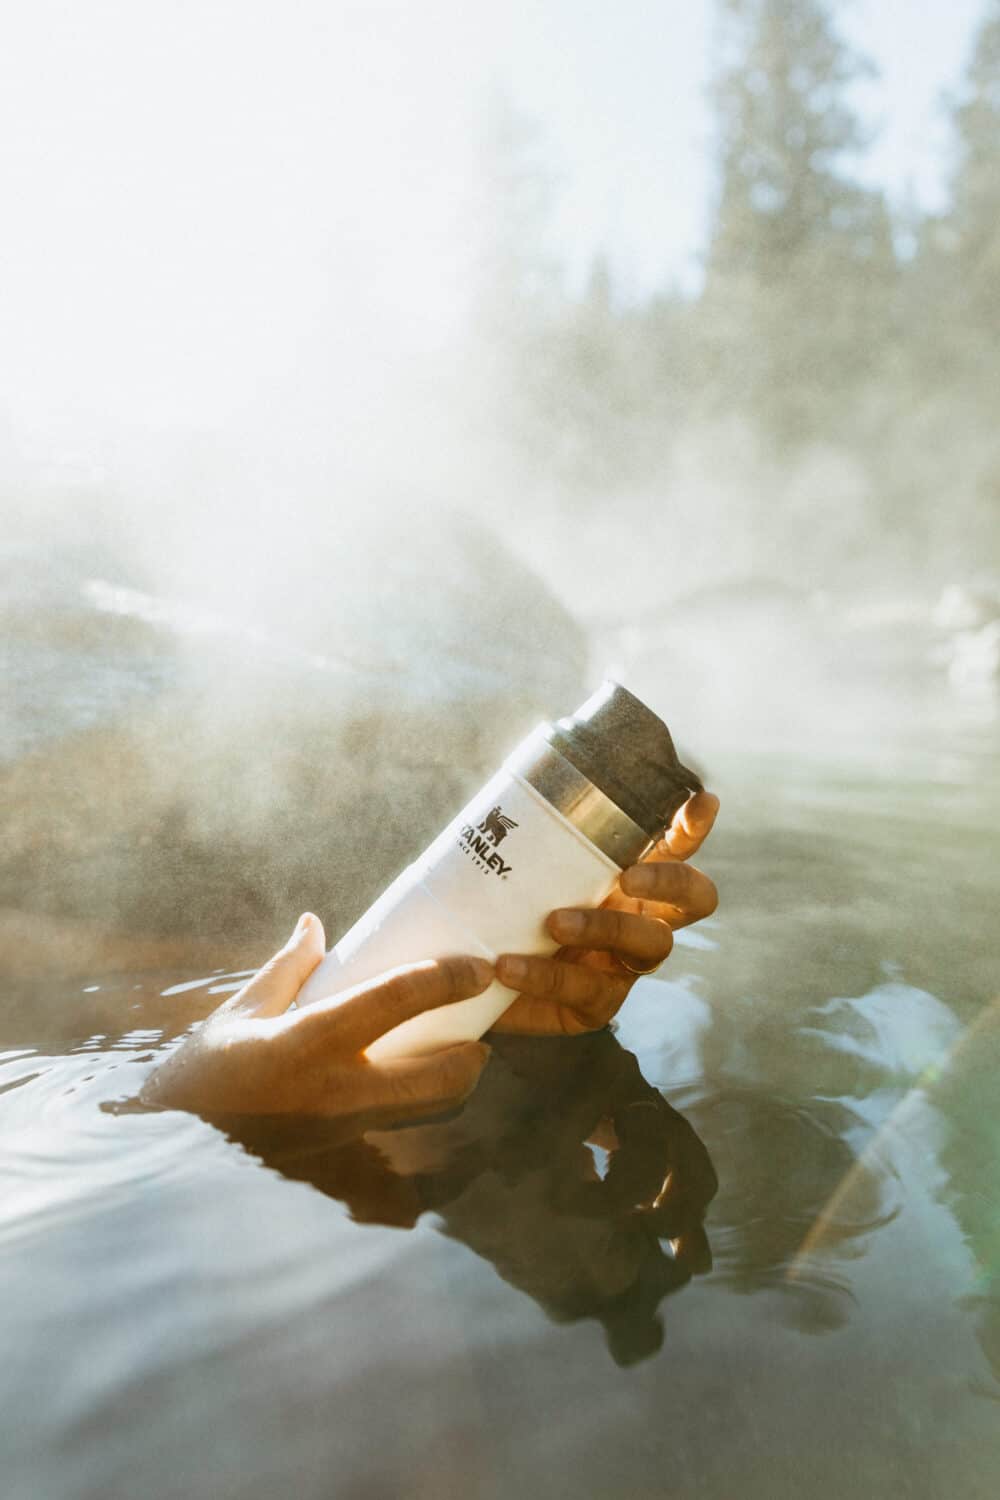 Hot Springs Packing List - No spill travel mug